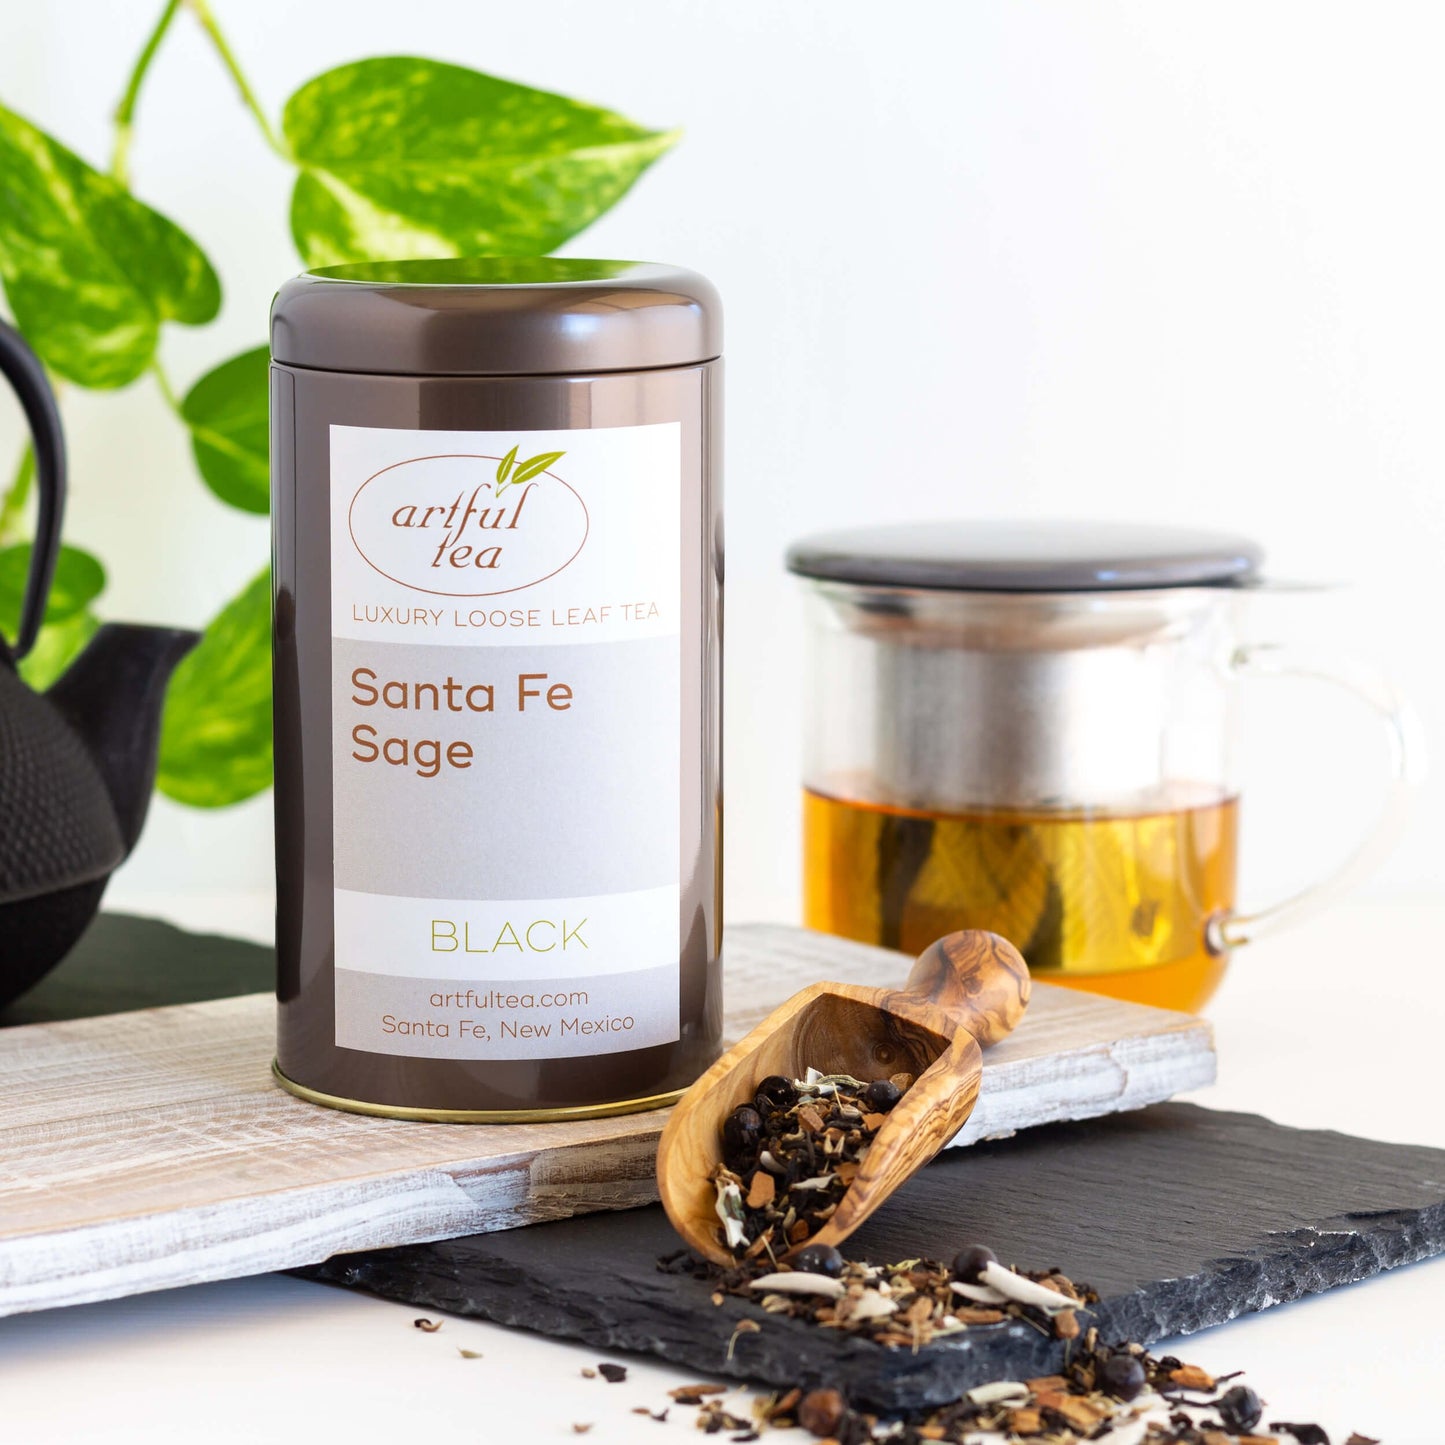 Santa Fe Sage Black Tea